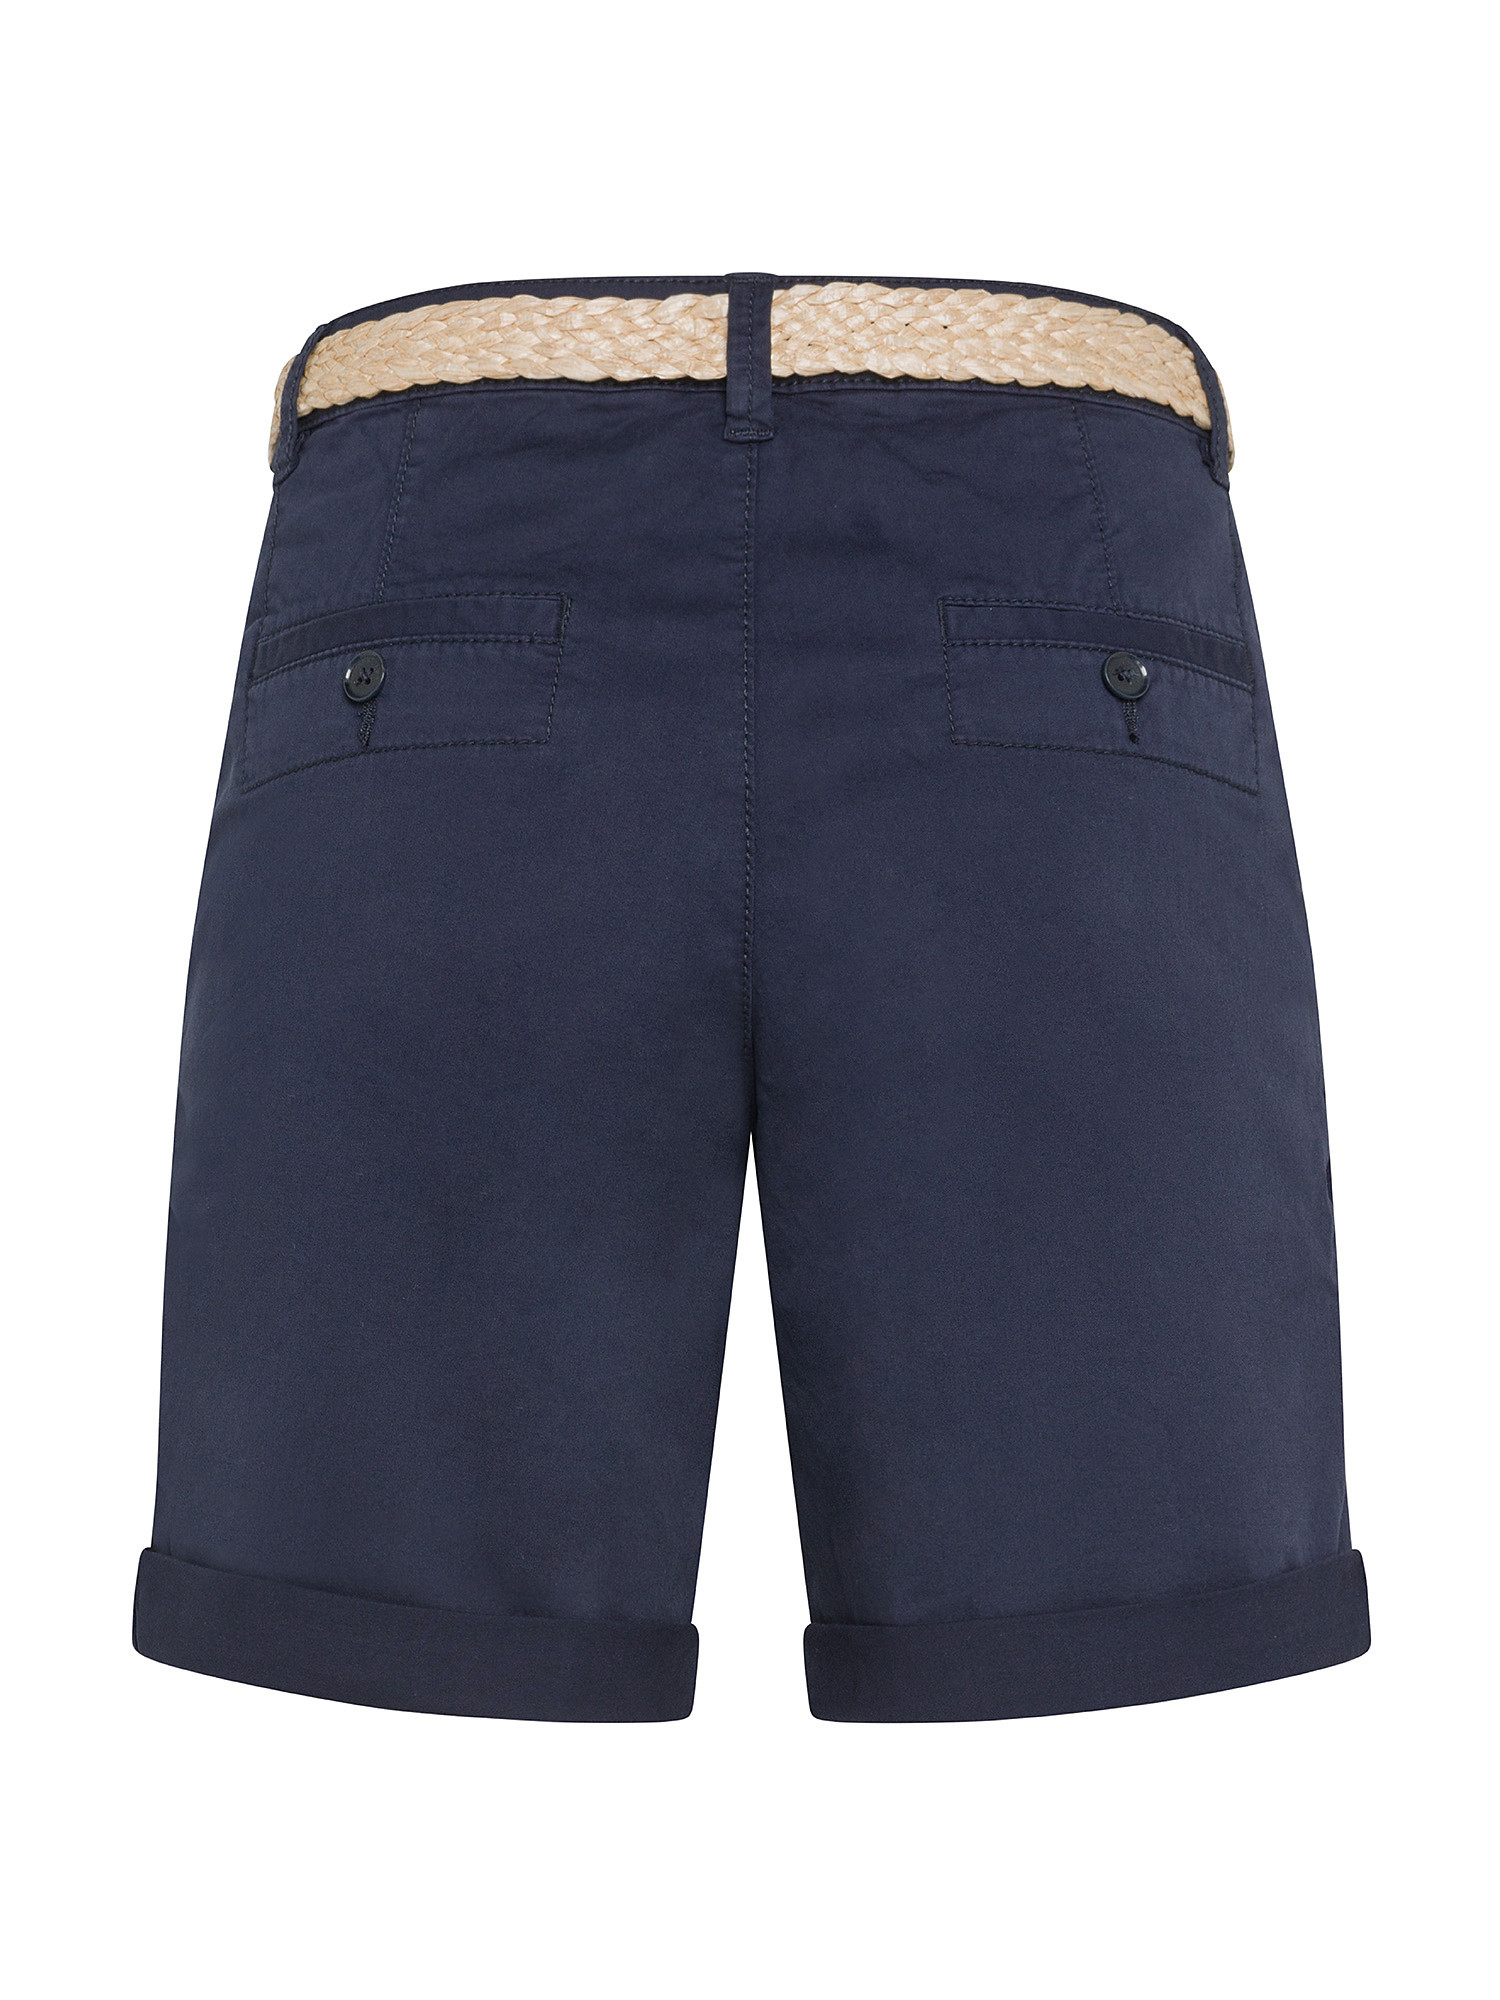 Esprit - Shorts with braided raffia belt, Dark Blue, large image number 1